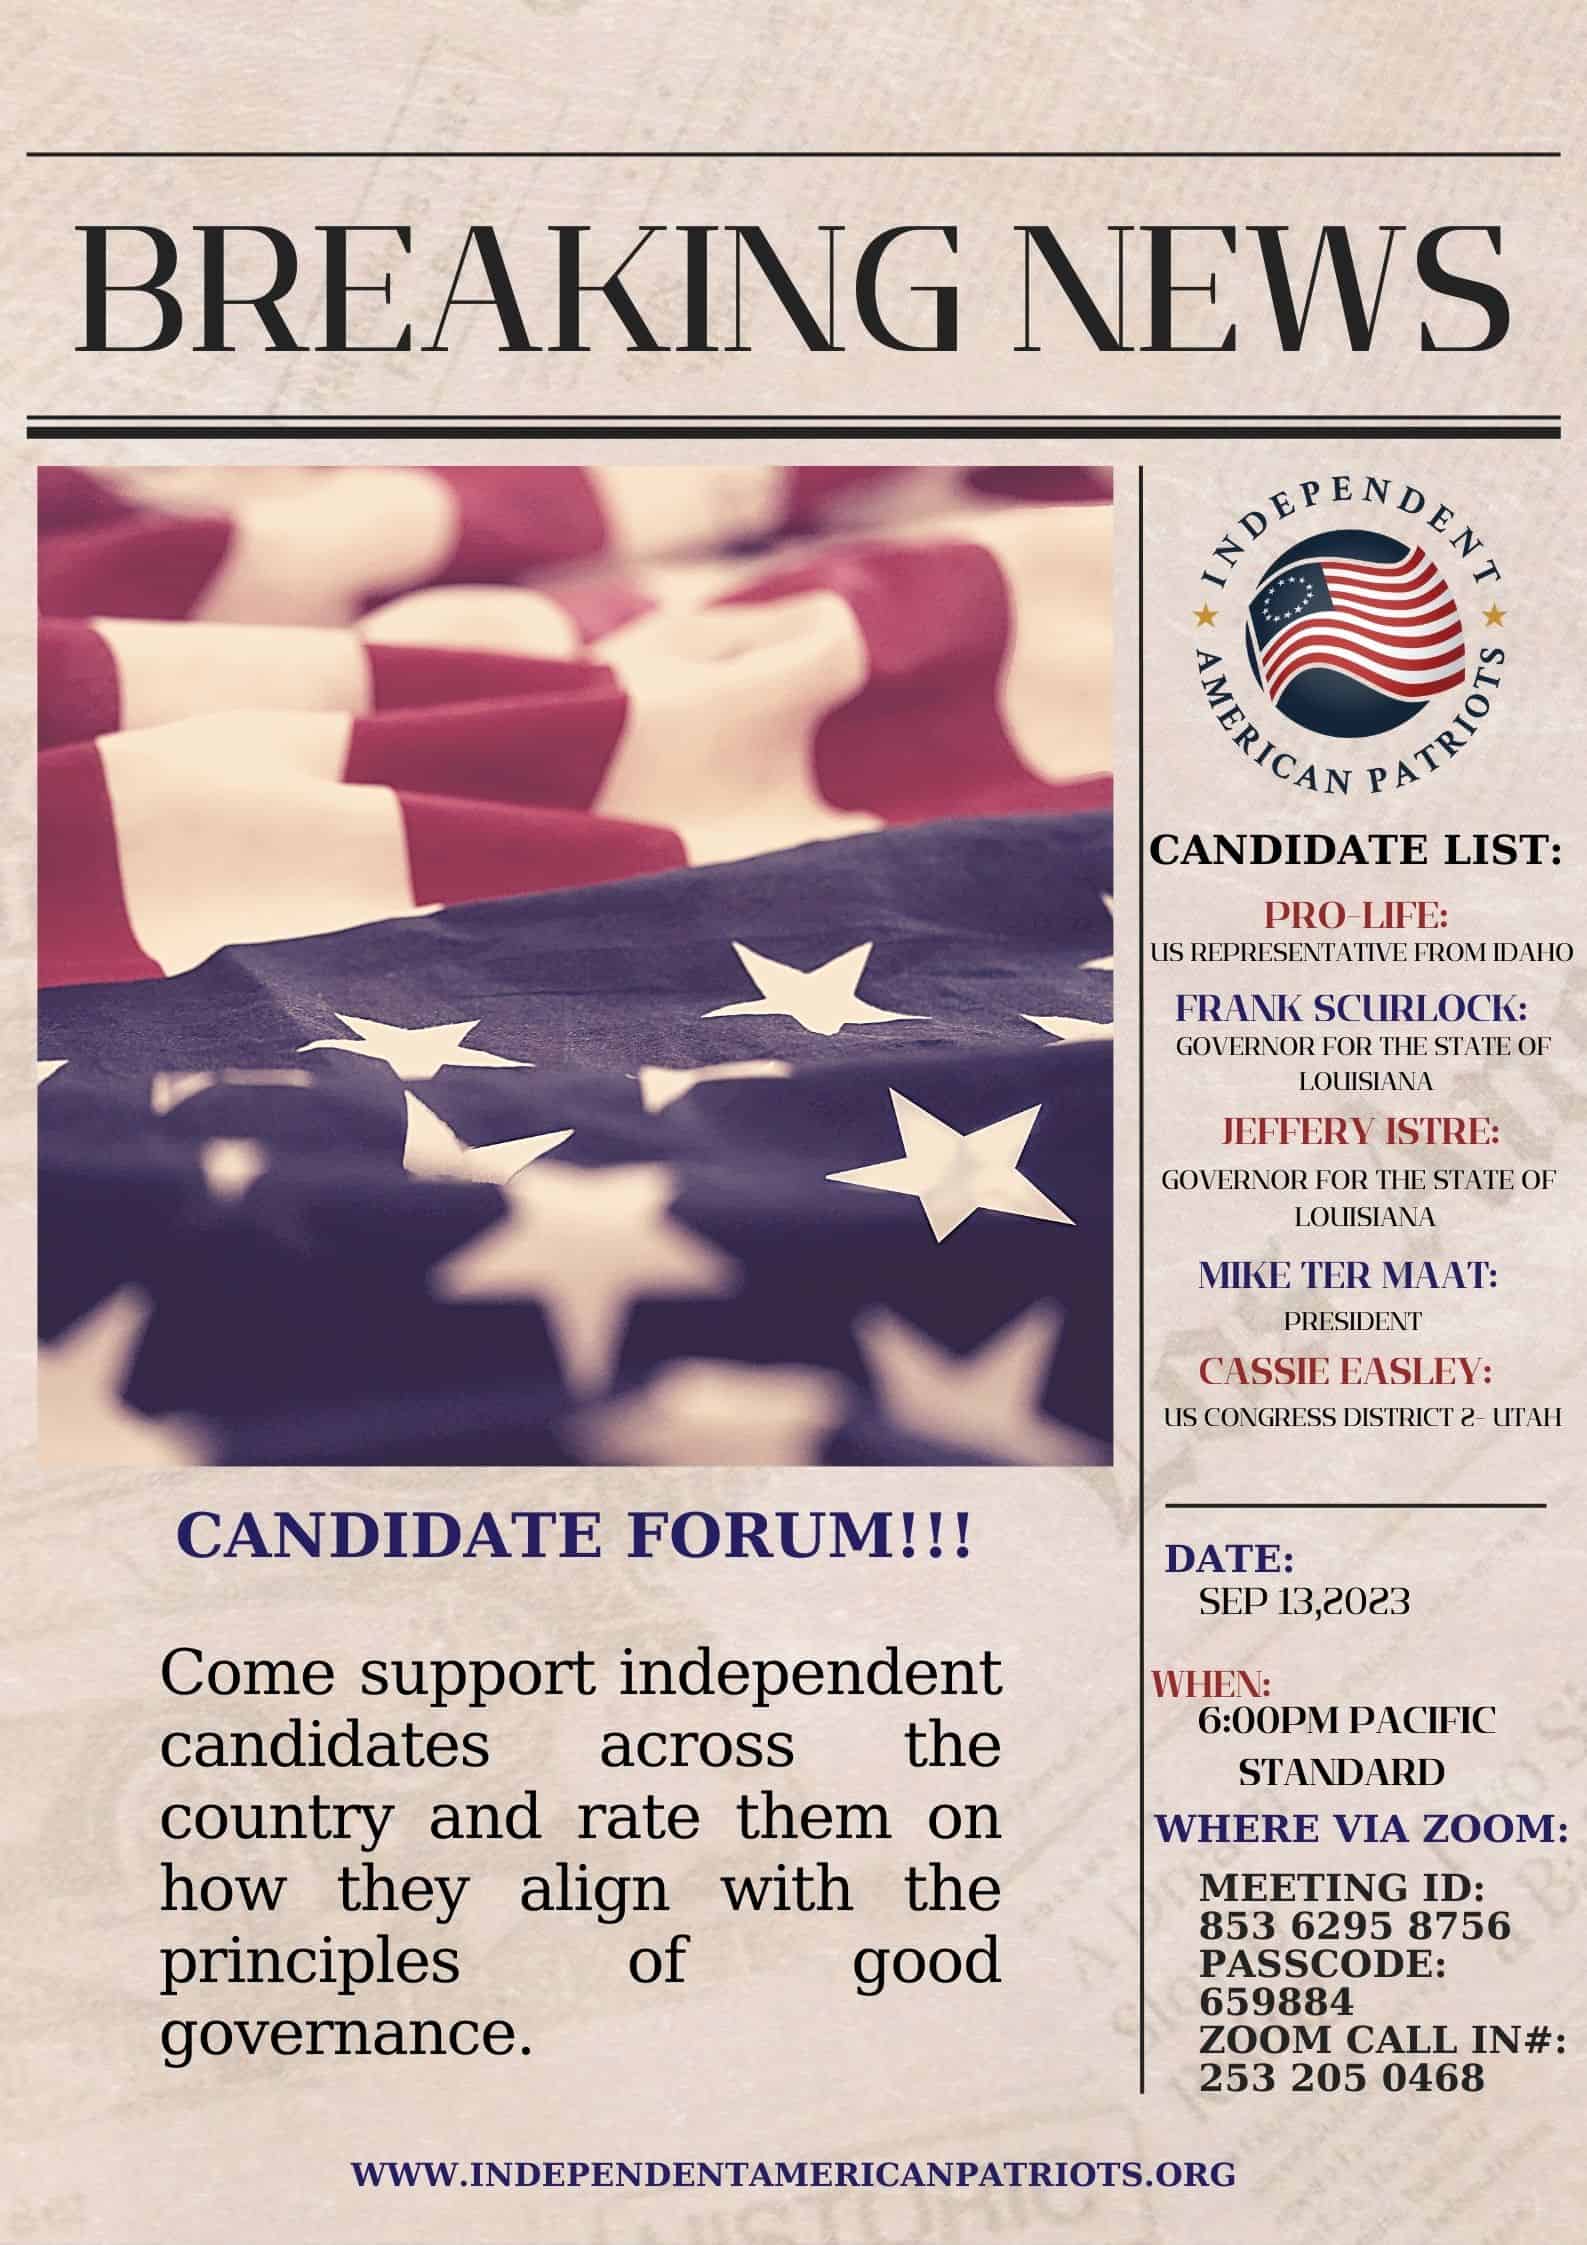 candidate forum invite for constituents